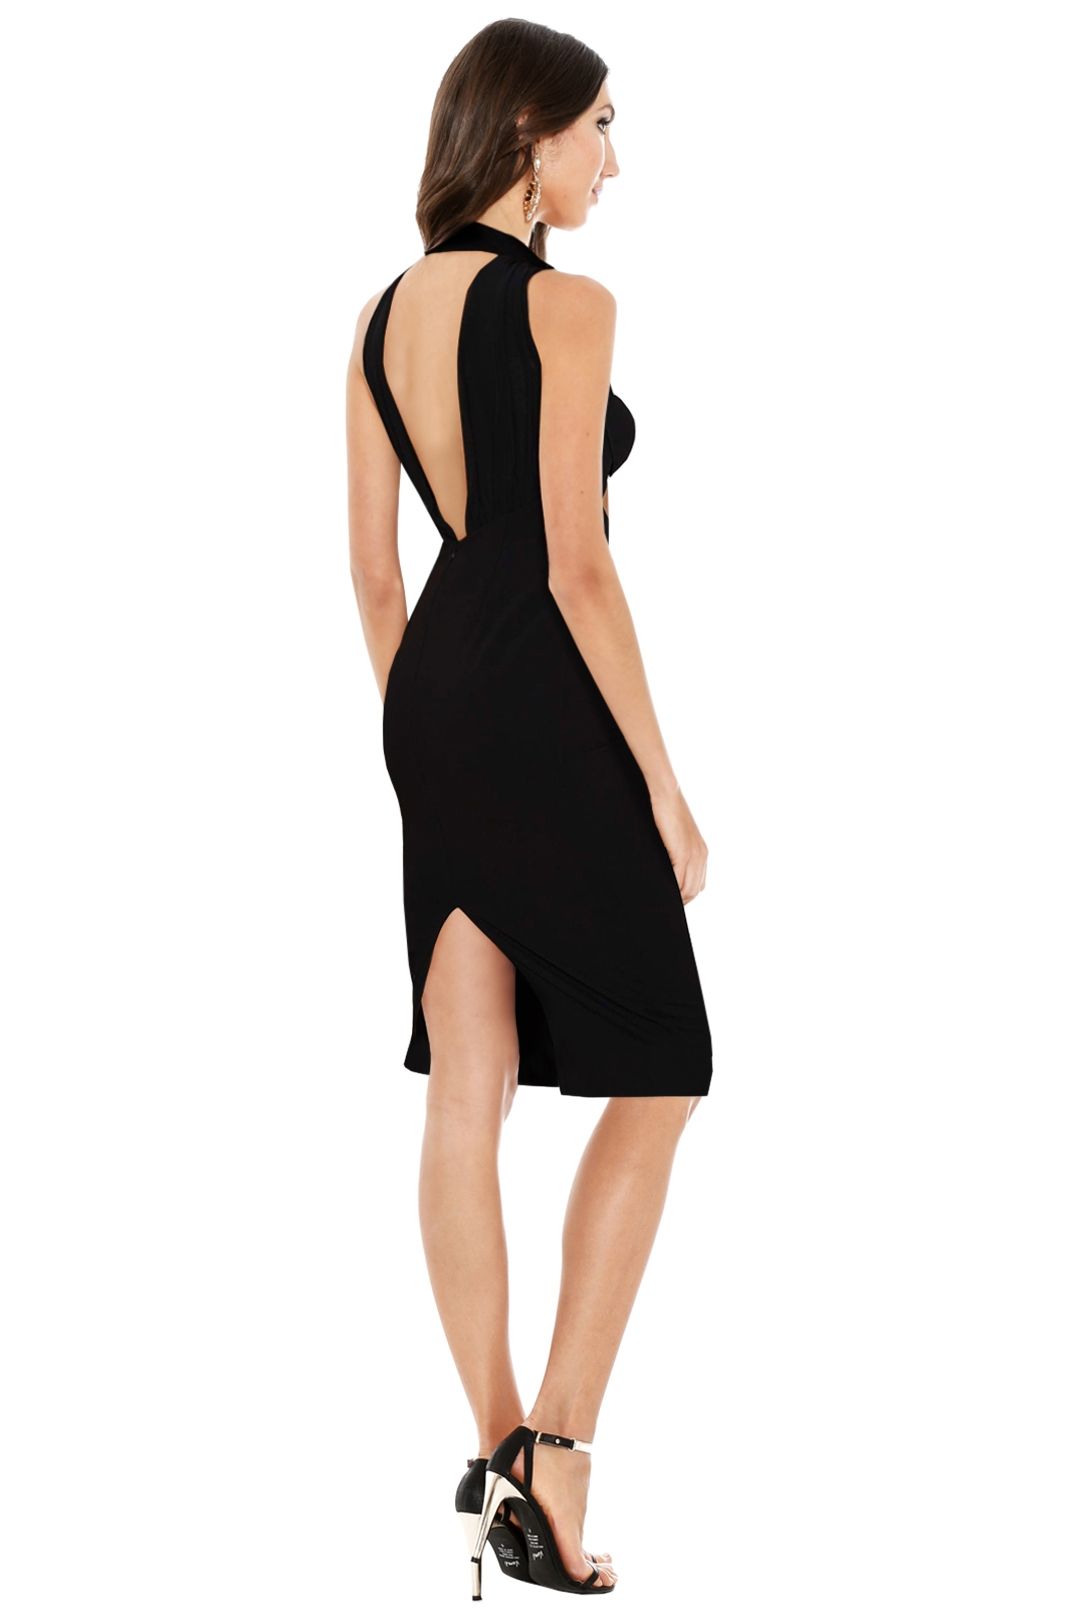 Misha Collection - Penelope Bodycon Dress - Black - Back